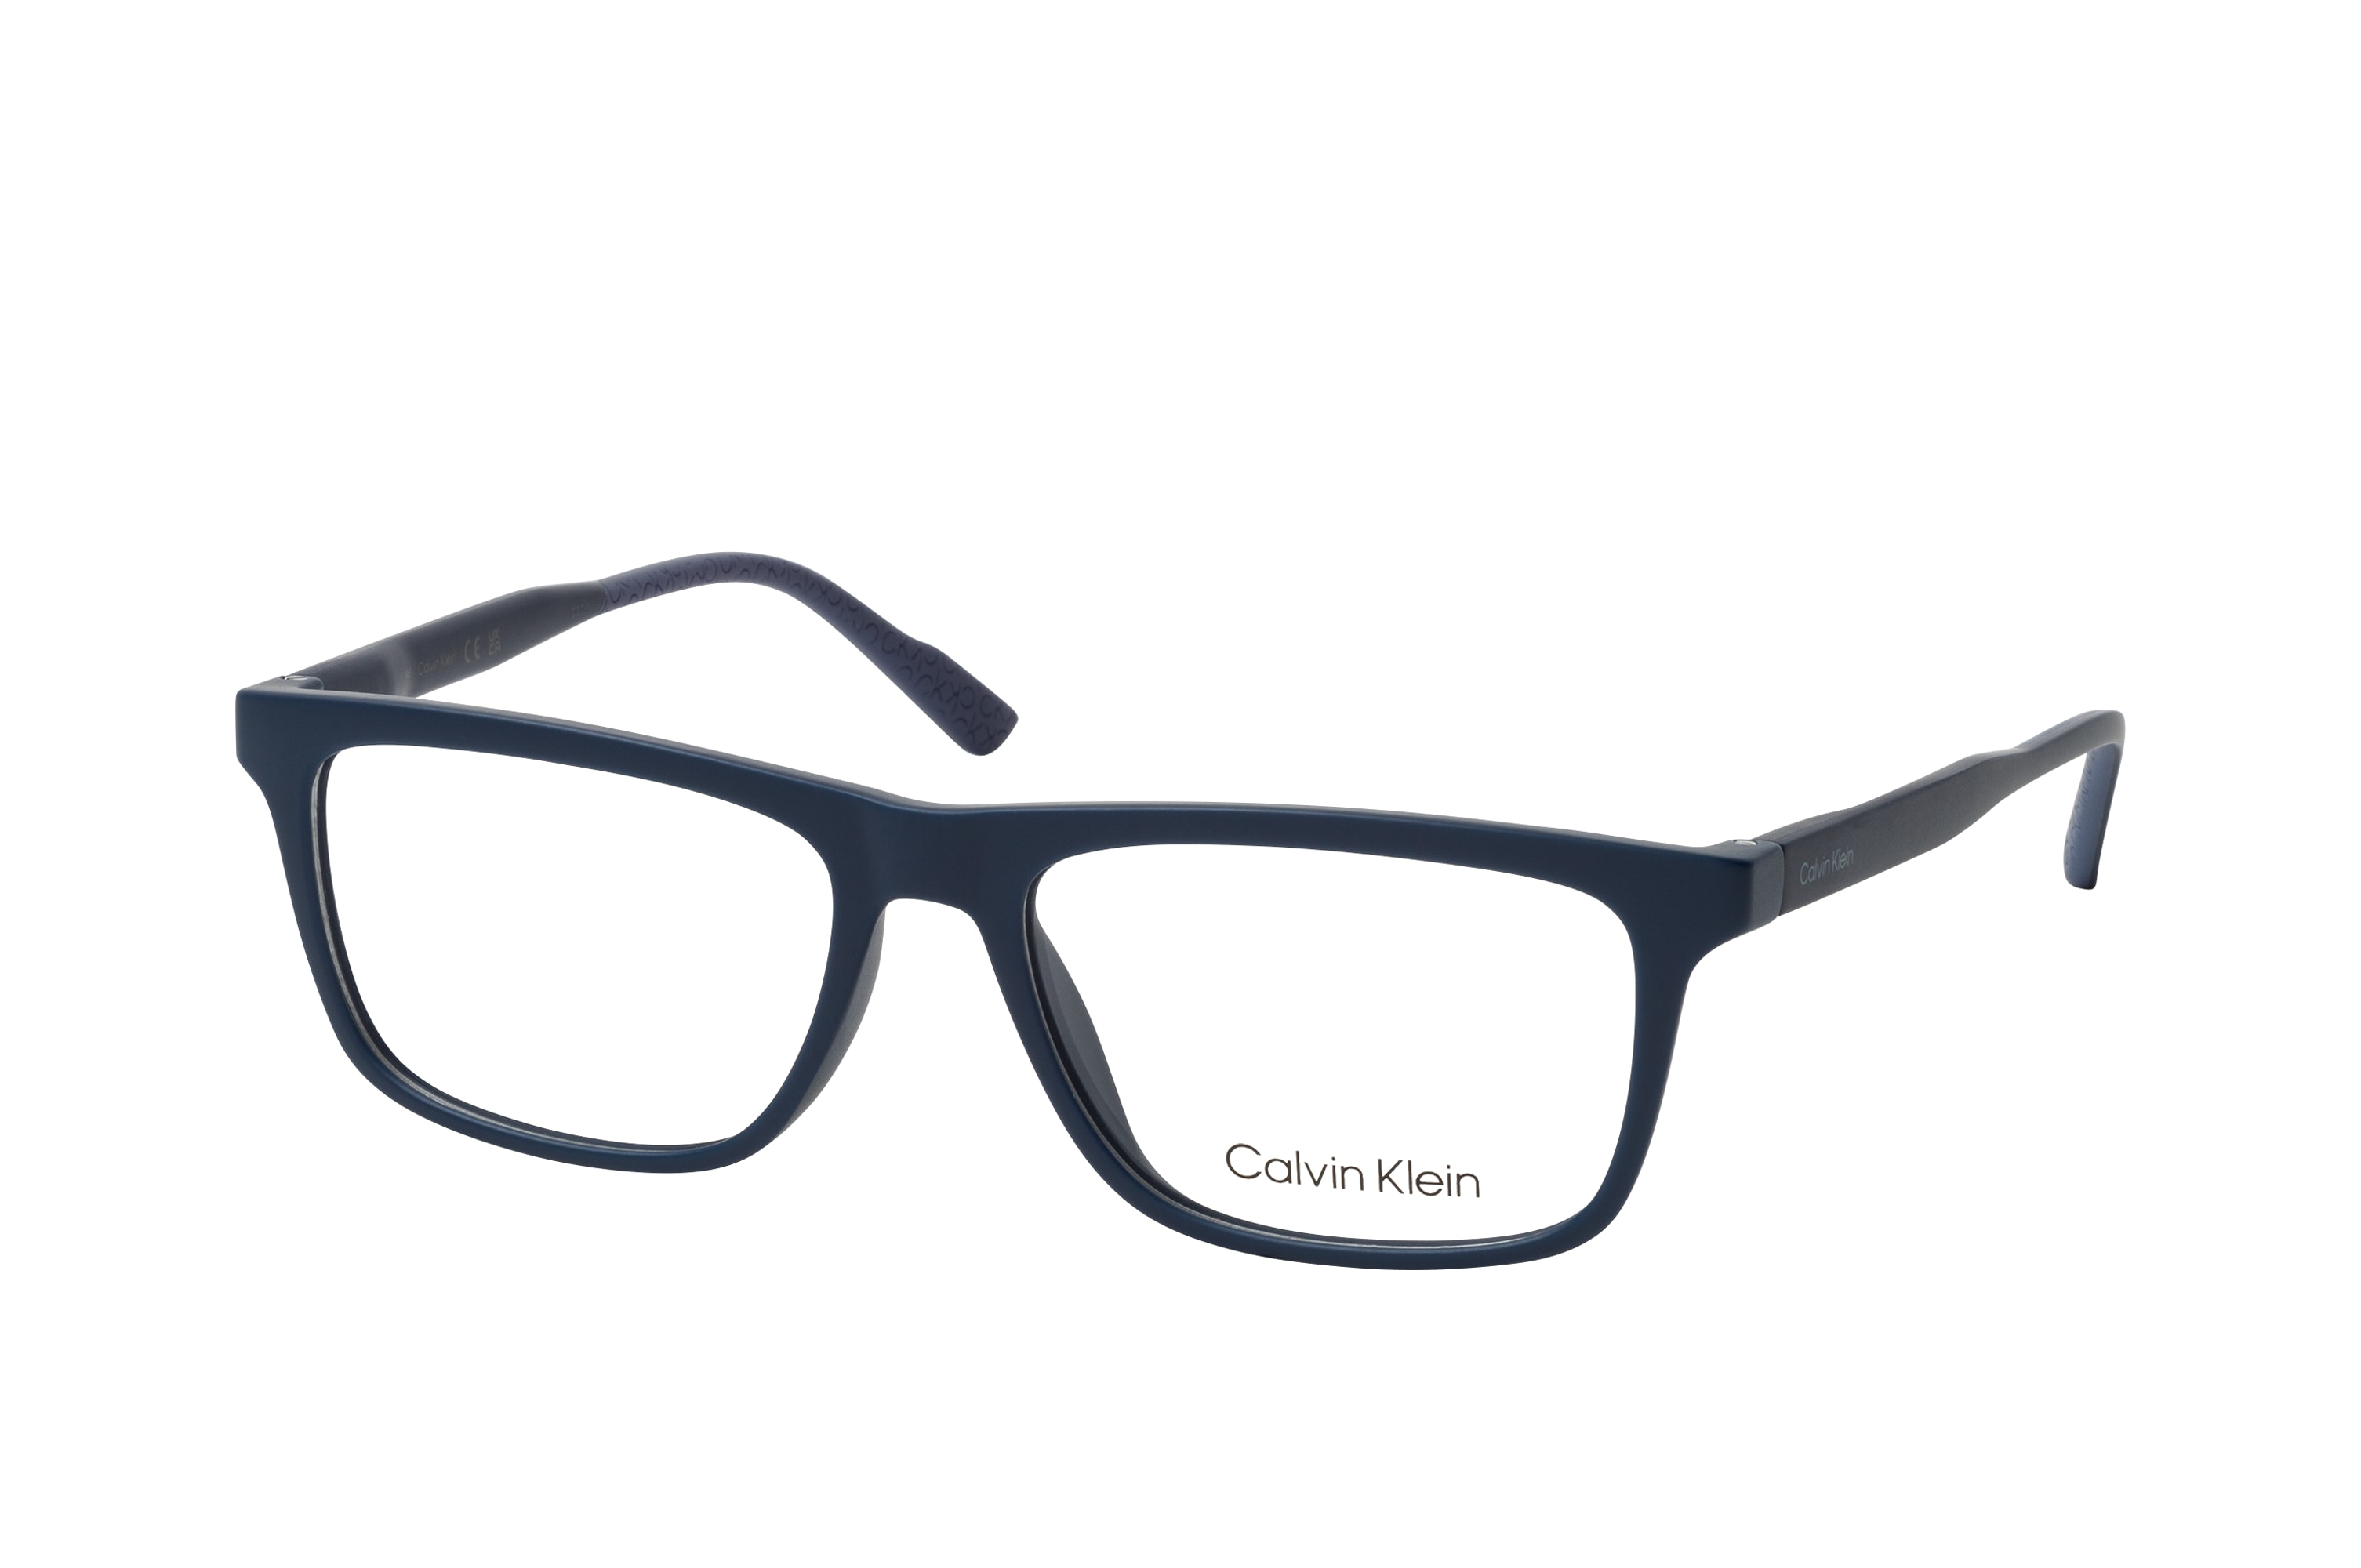 Buy Calvin Klein CK 22547 438 Glasses